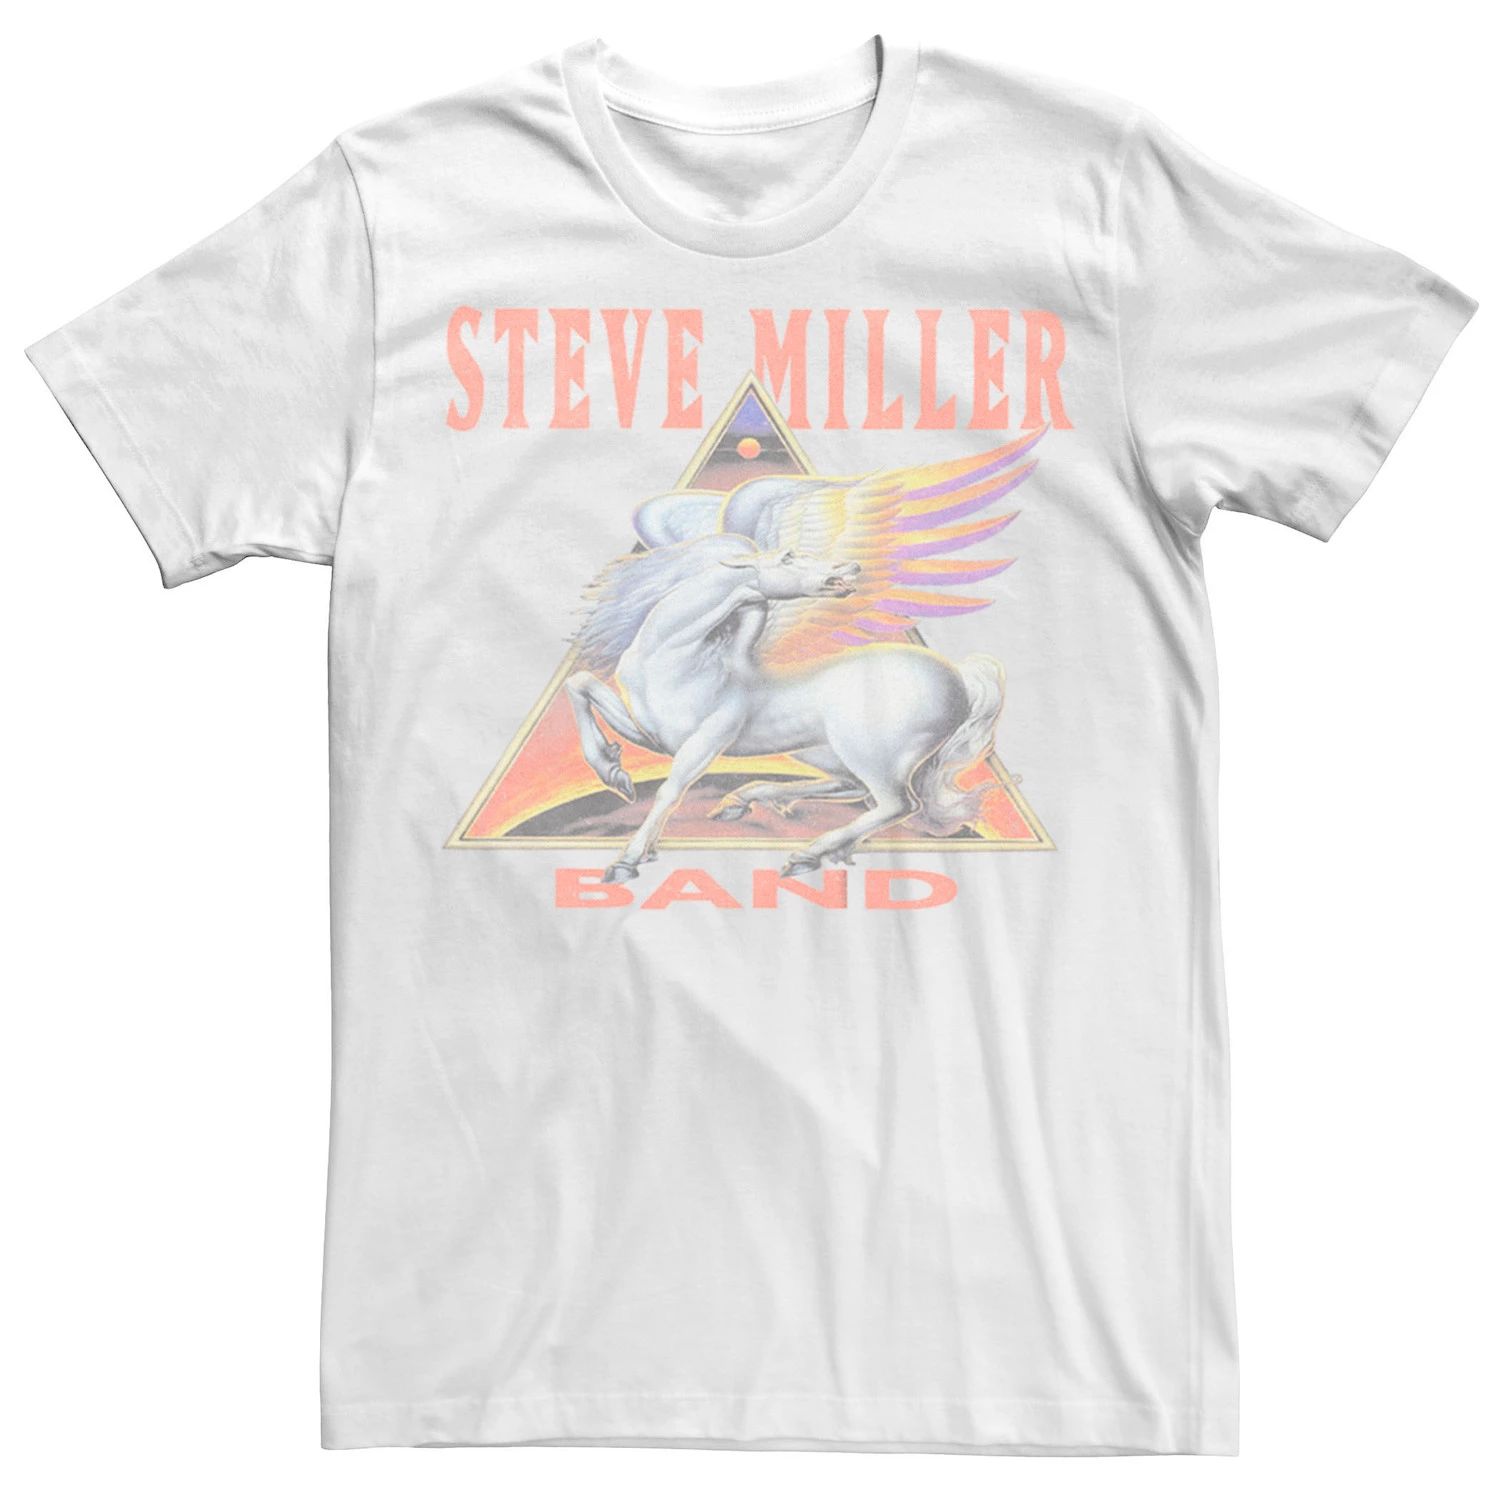 Мужская футболка с треугольным логотипом Steve Miller Licensed Character